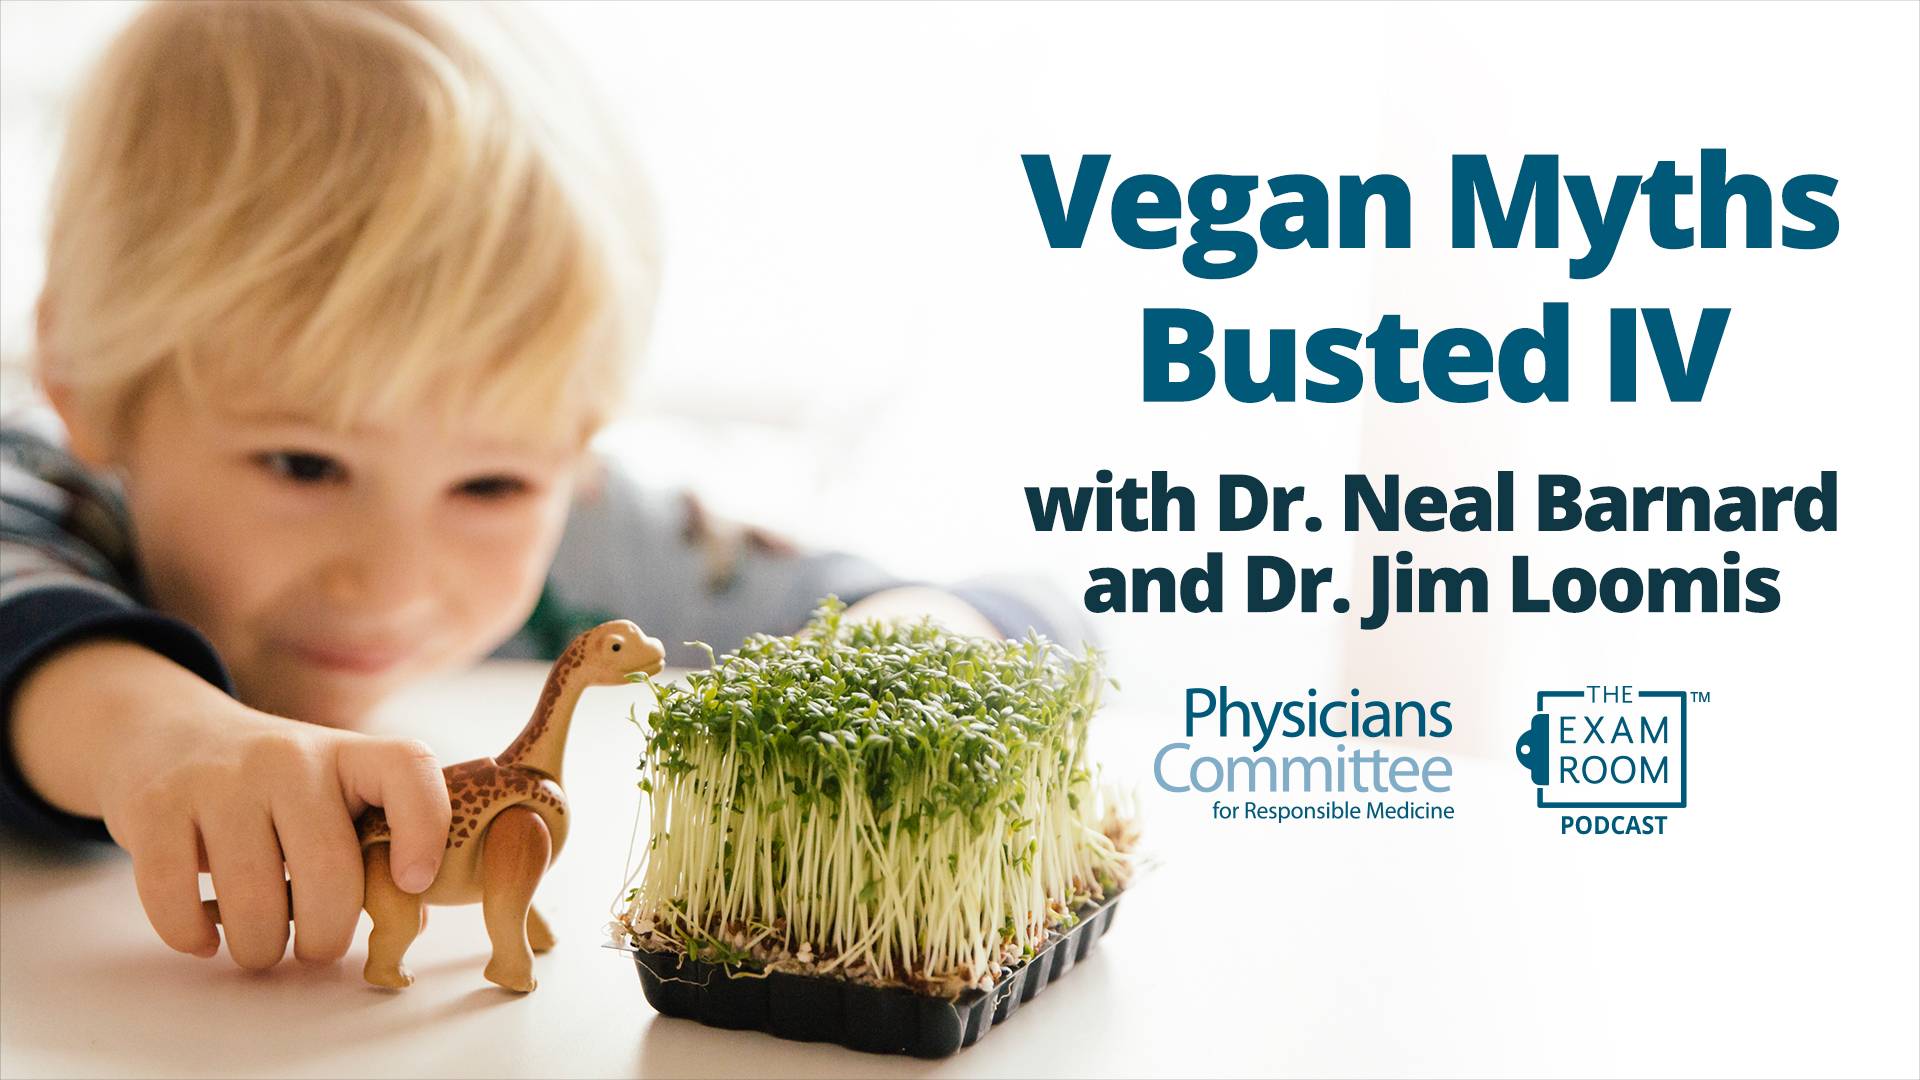 Vegan Diet Myths IV With Dr. Neal Barnard and Dr. Jim Loomis